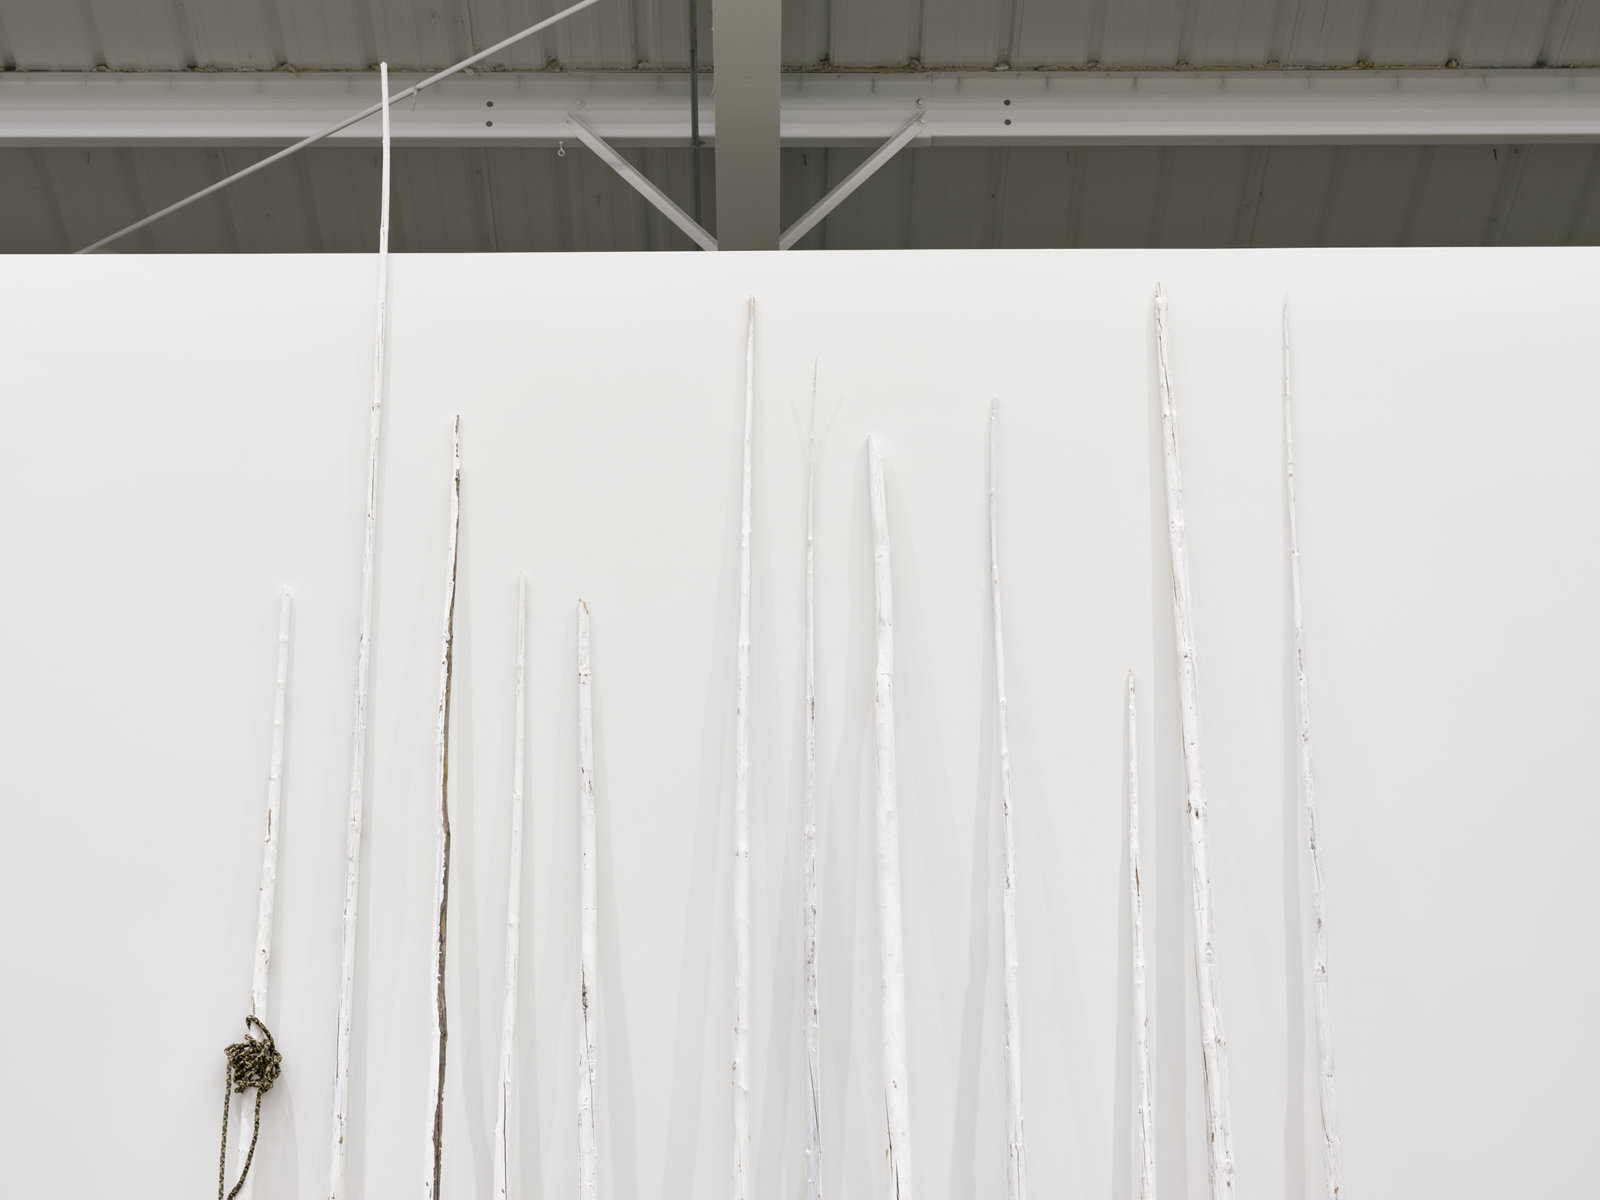 Duane Linklater, action at a distance (detail), 2020, tipi poles, paint, nylon rope, plants, plates, ceramics, sandbags, frames, 12 digital prints, mirror, 233 x 102 x 66 in. (592 x 259 x 168 cm)